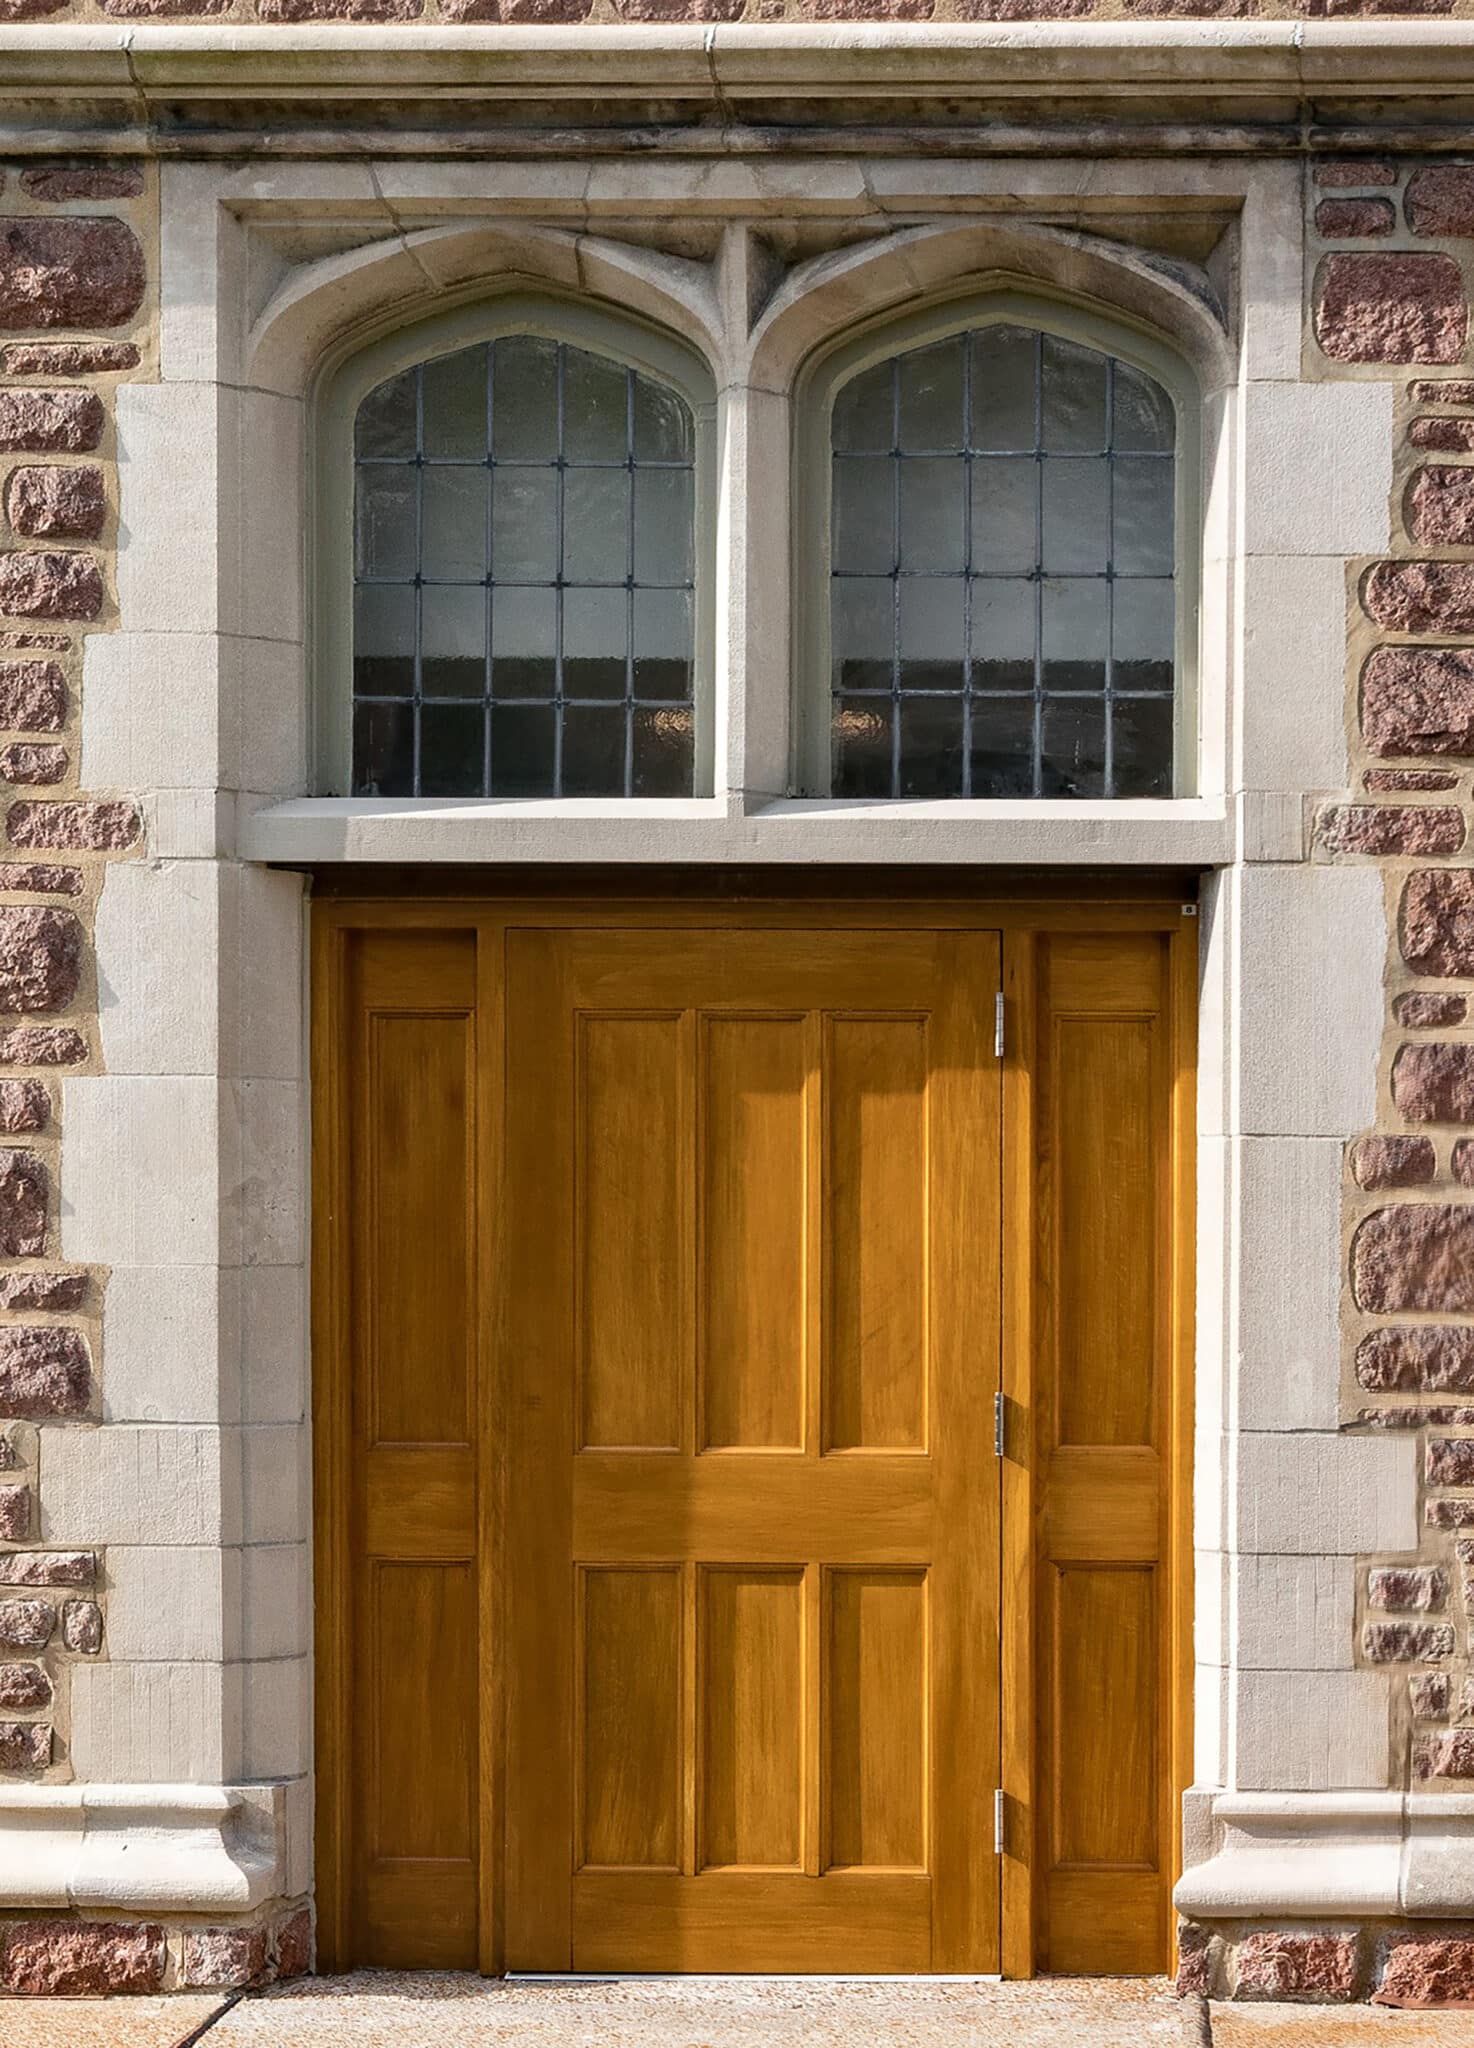 washington university january hall entryway front doors designed by trivers